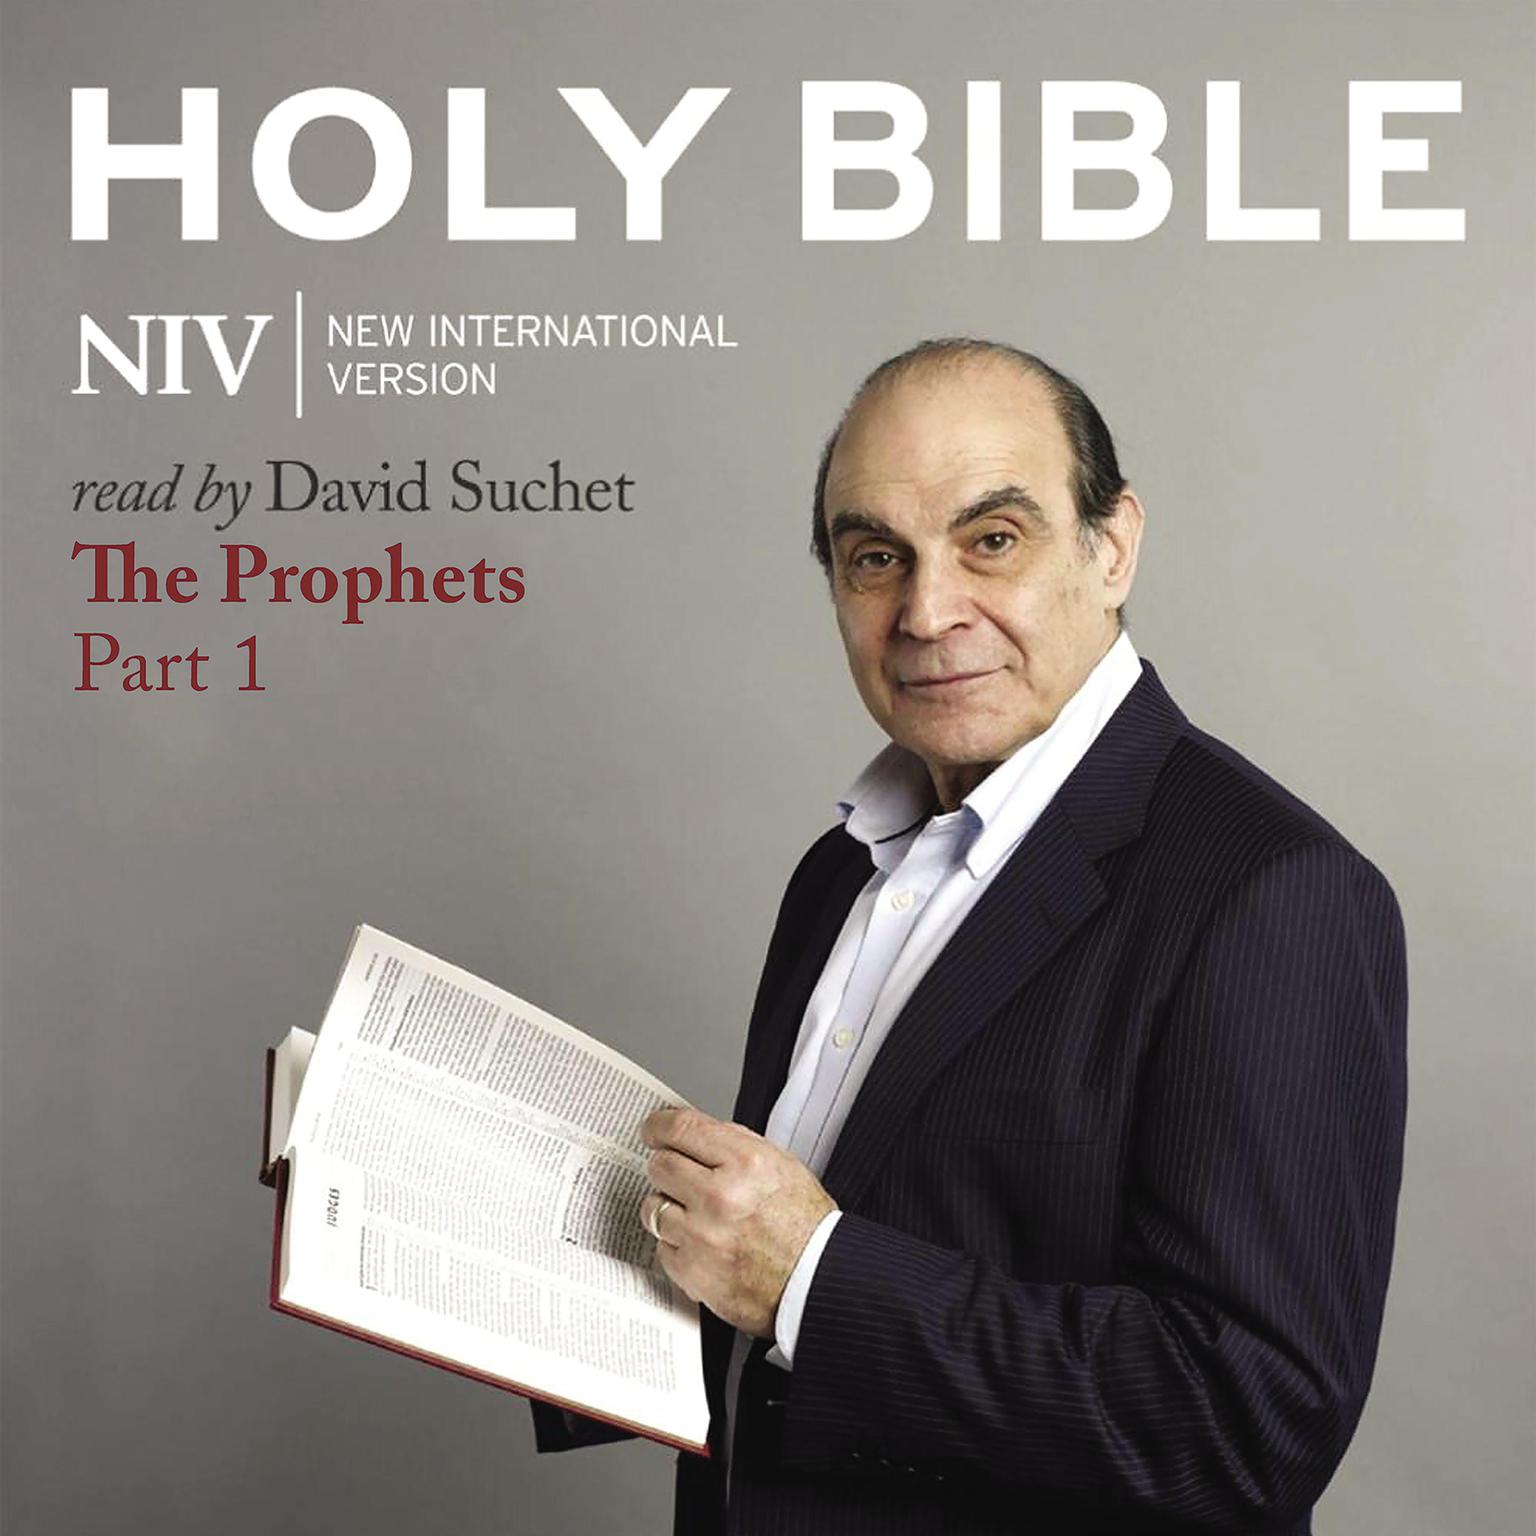 David Suchet Audio Bible - New International Version, NIV: The Prophets Part 1 Audiobook, by Zondervan